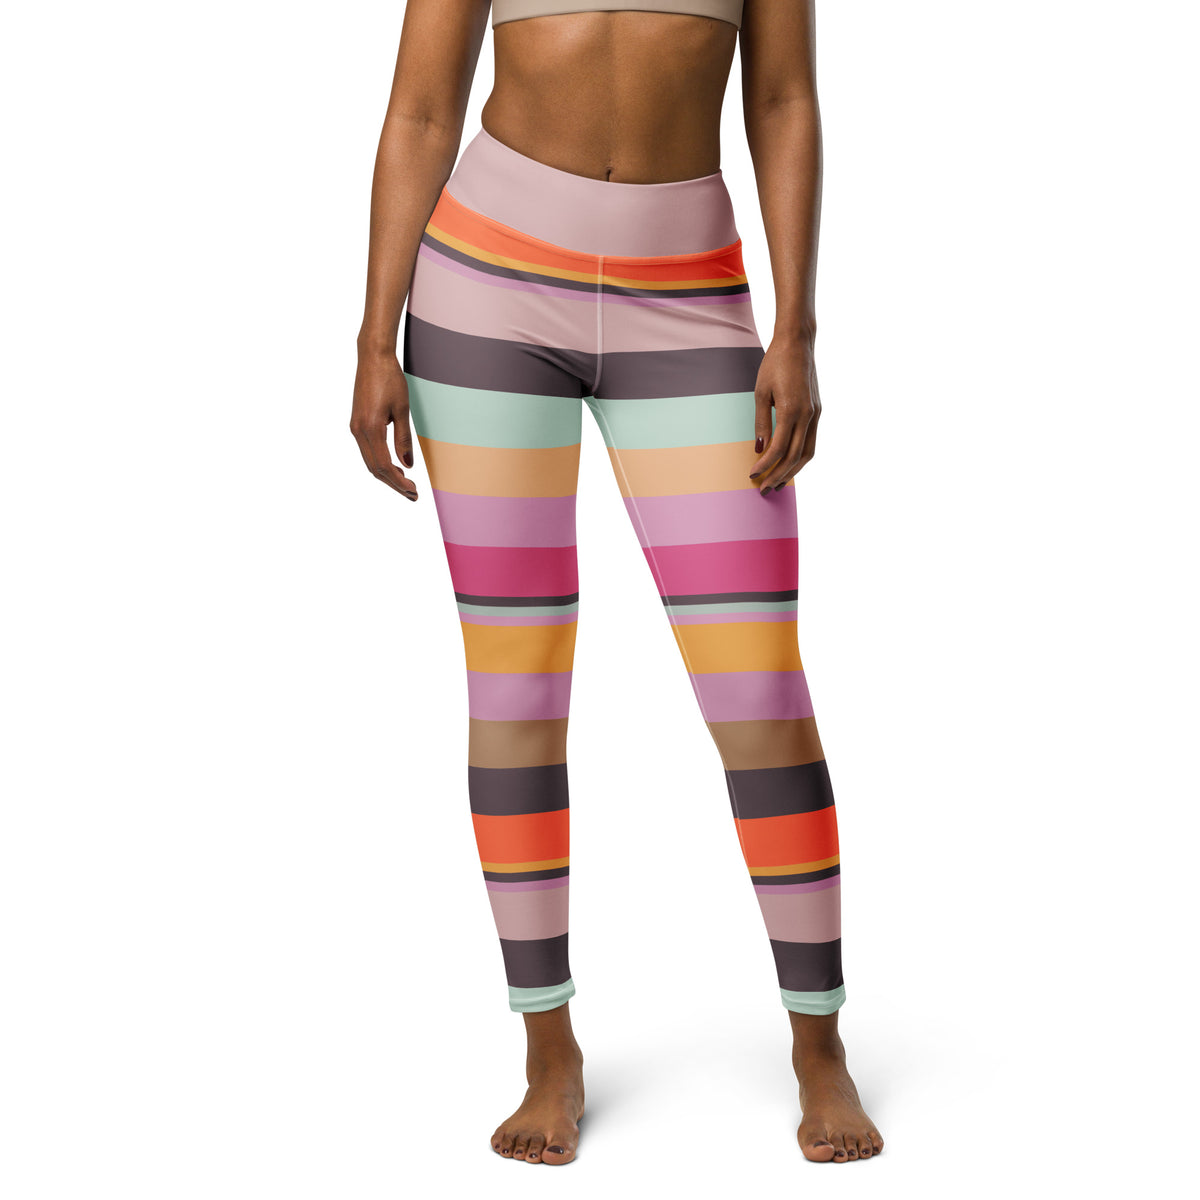 Fiesta Fiesta Colorful Stripe All-Over Print Yoga Leggings